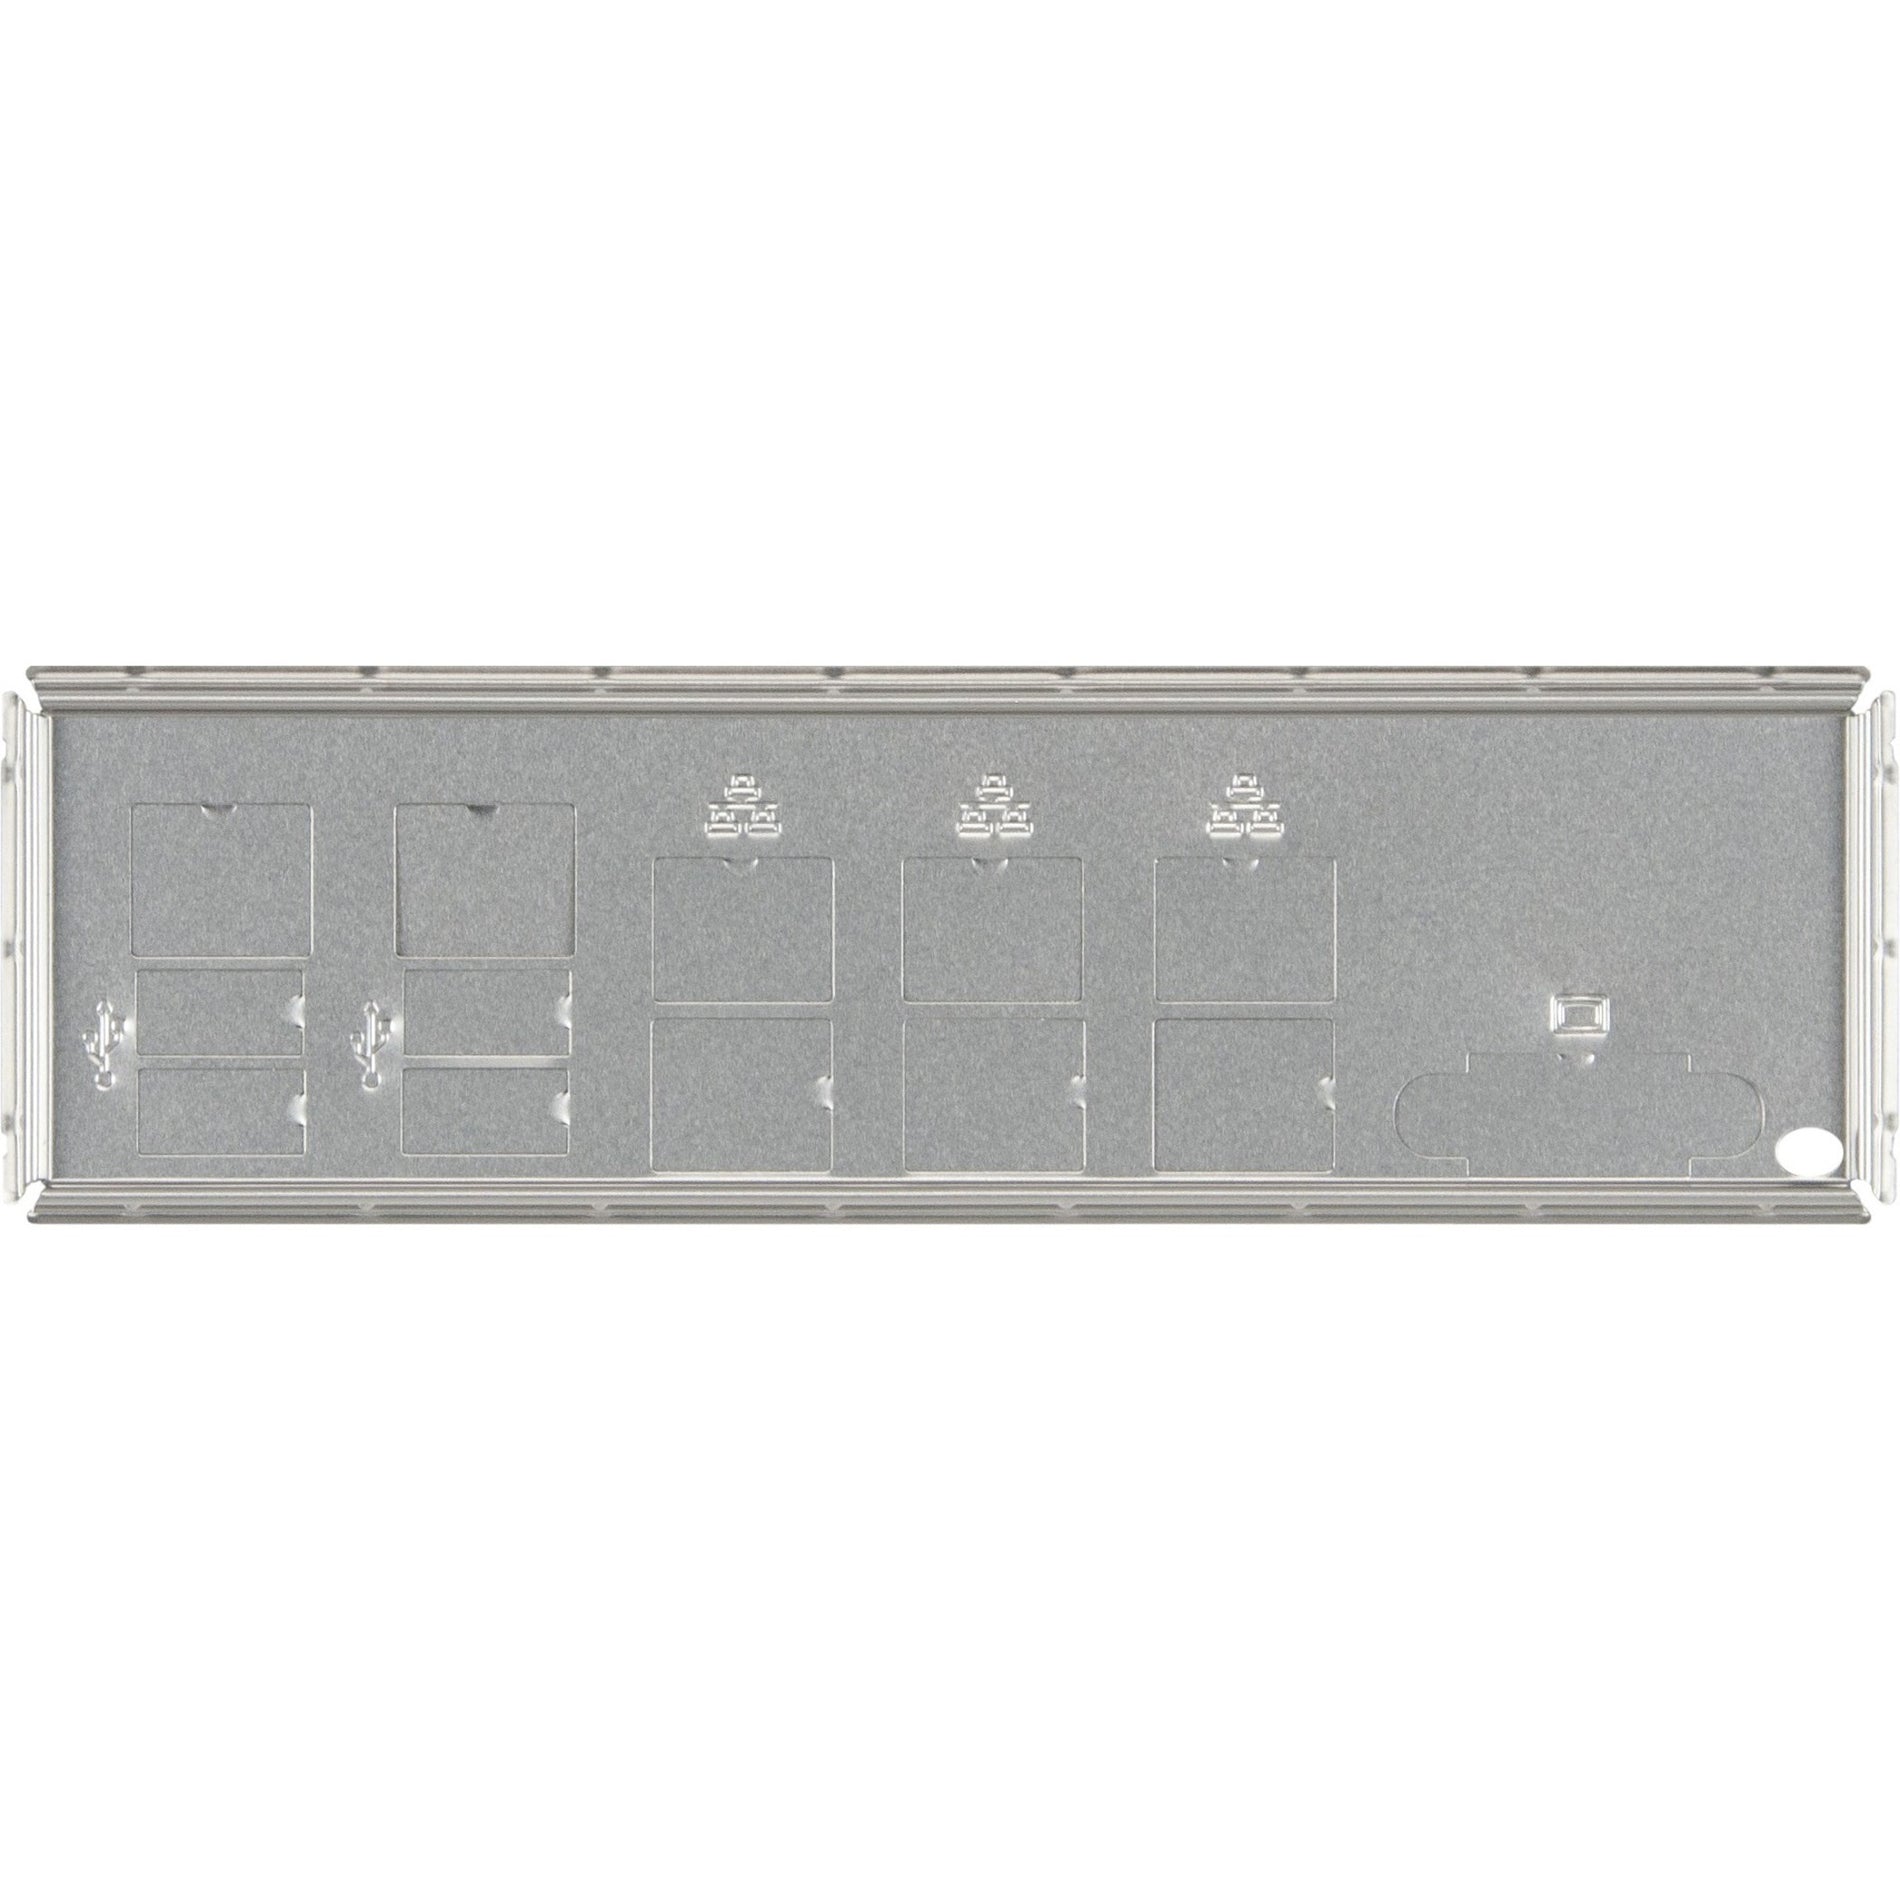 Supermicro MCP-260-00084-0N Standard I/O Shield for A2SDV-TLN5F, Silver Metal Rear Panel